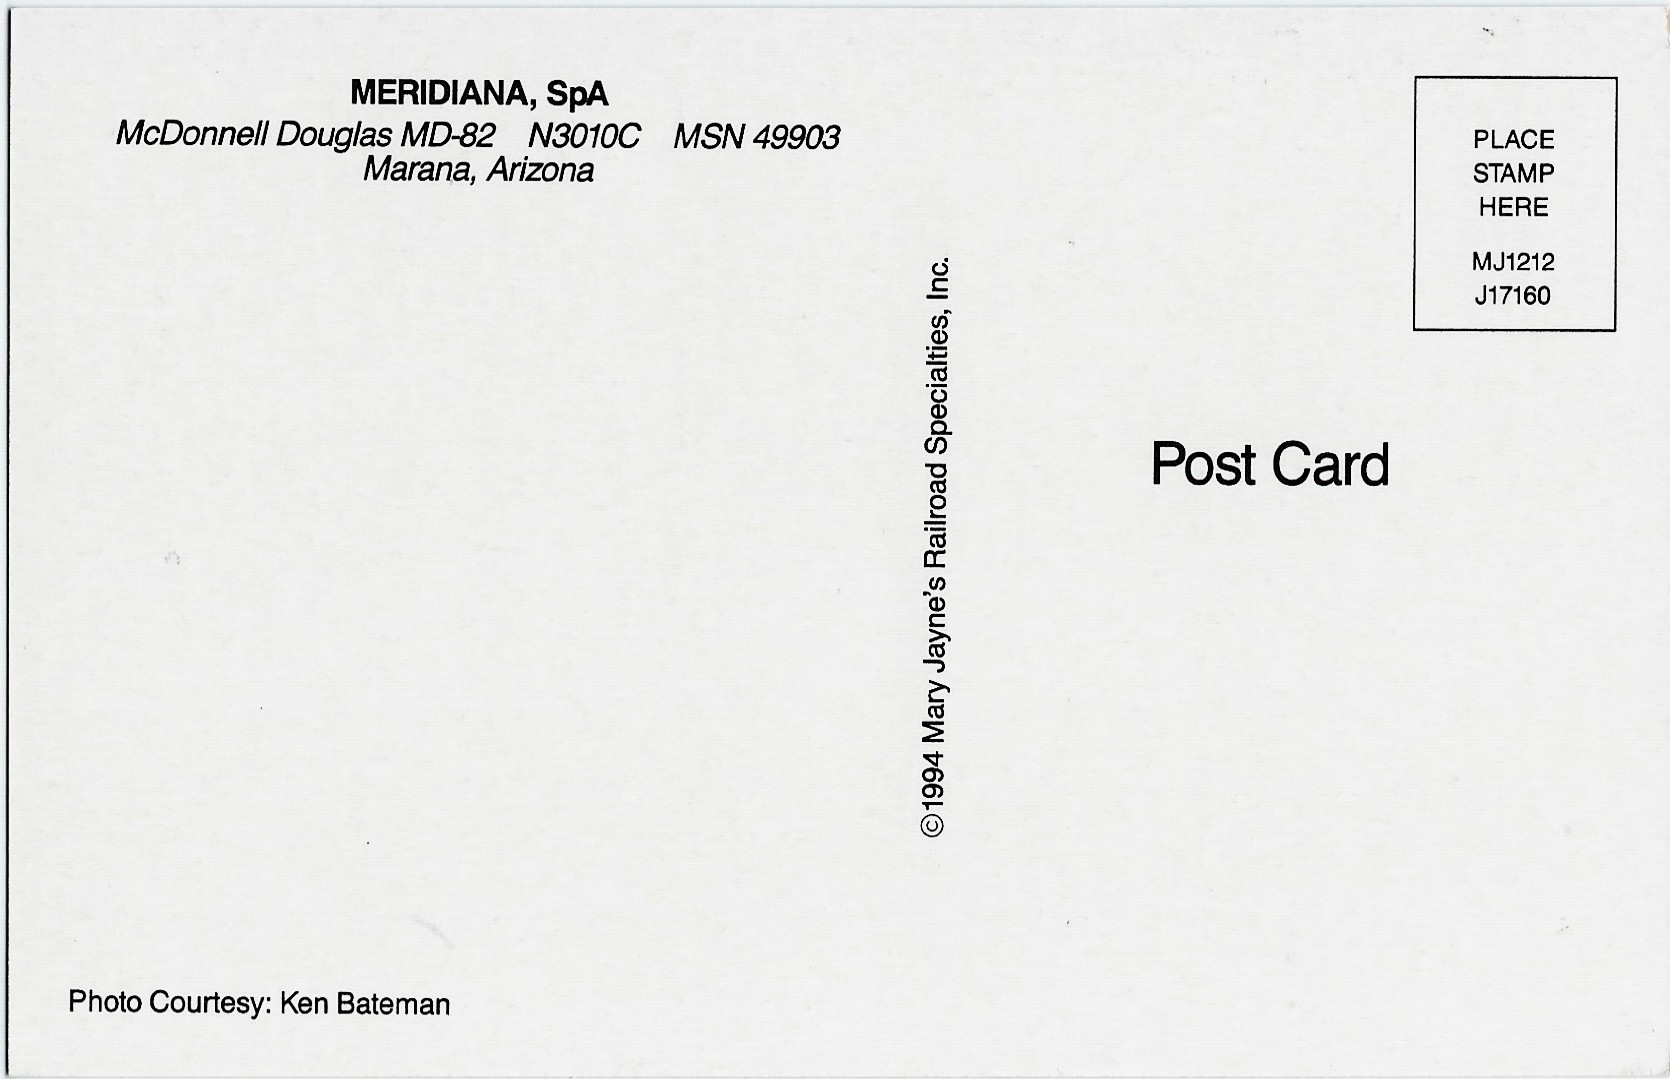 MERIDIANA, SpA Airplane Postcard J17160